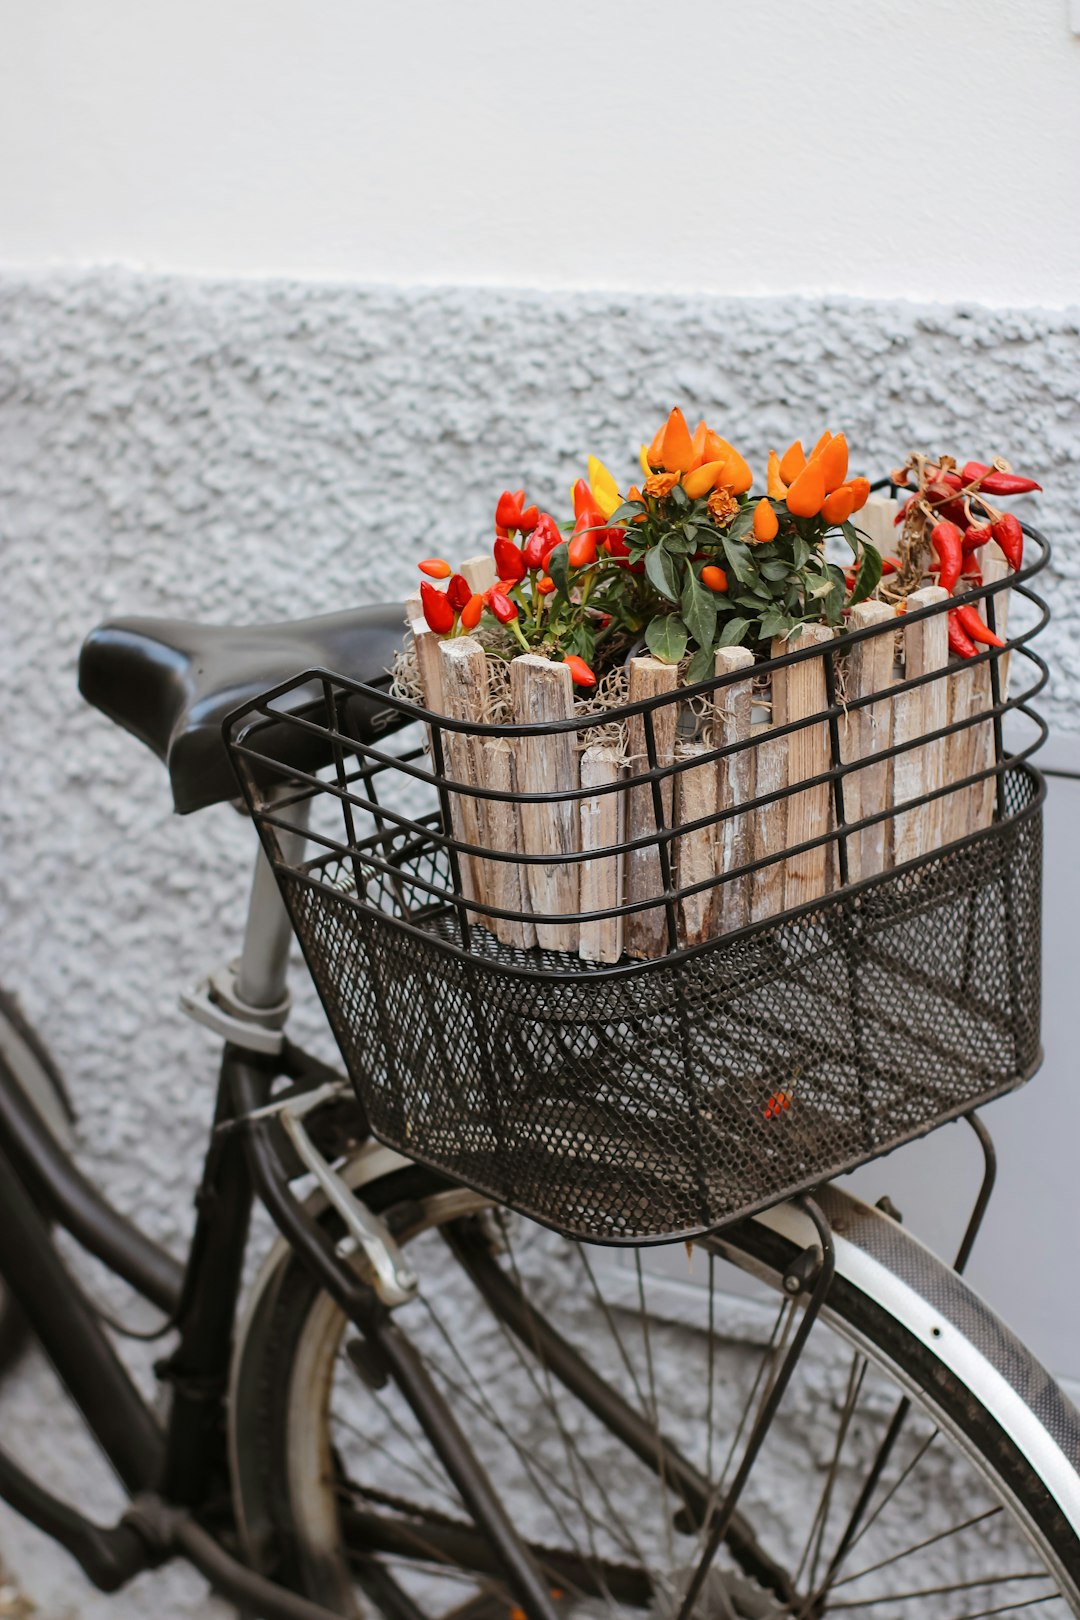 black metal basket with orange and red flowers on bicycle